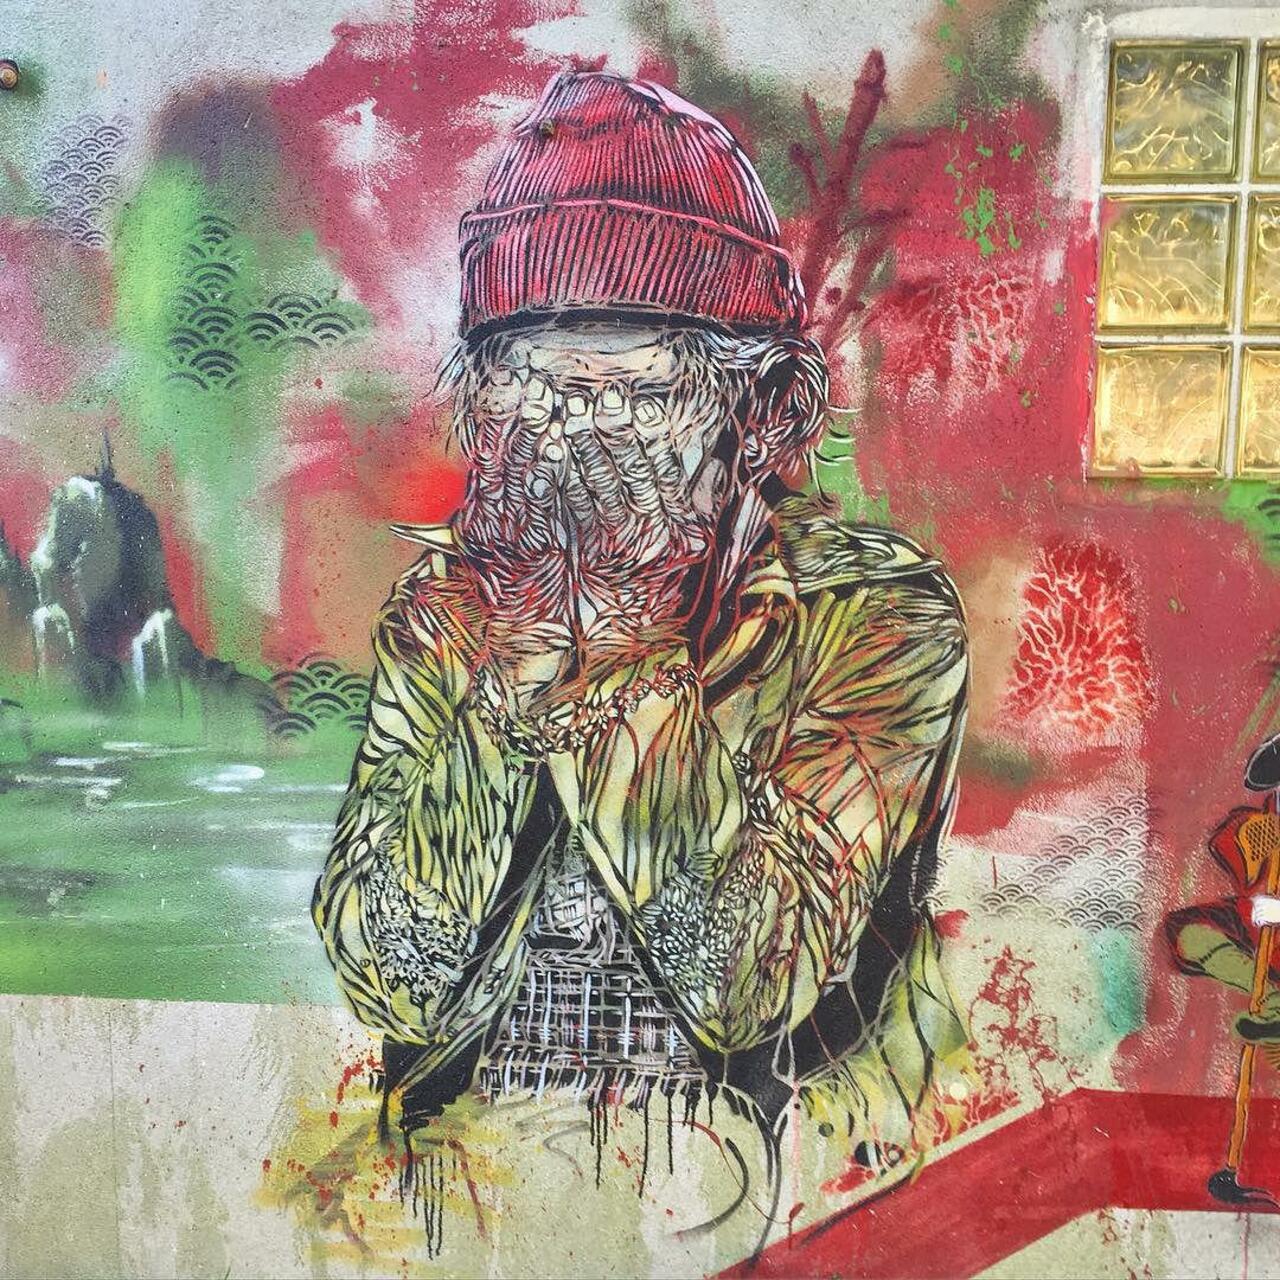 #Paris #graffiti photo by @jeanlucr http://ift.tt/1RRbobg #StreetArt https://t.co/ytXhOObLle